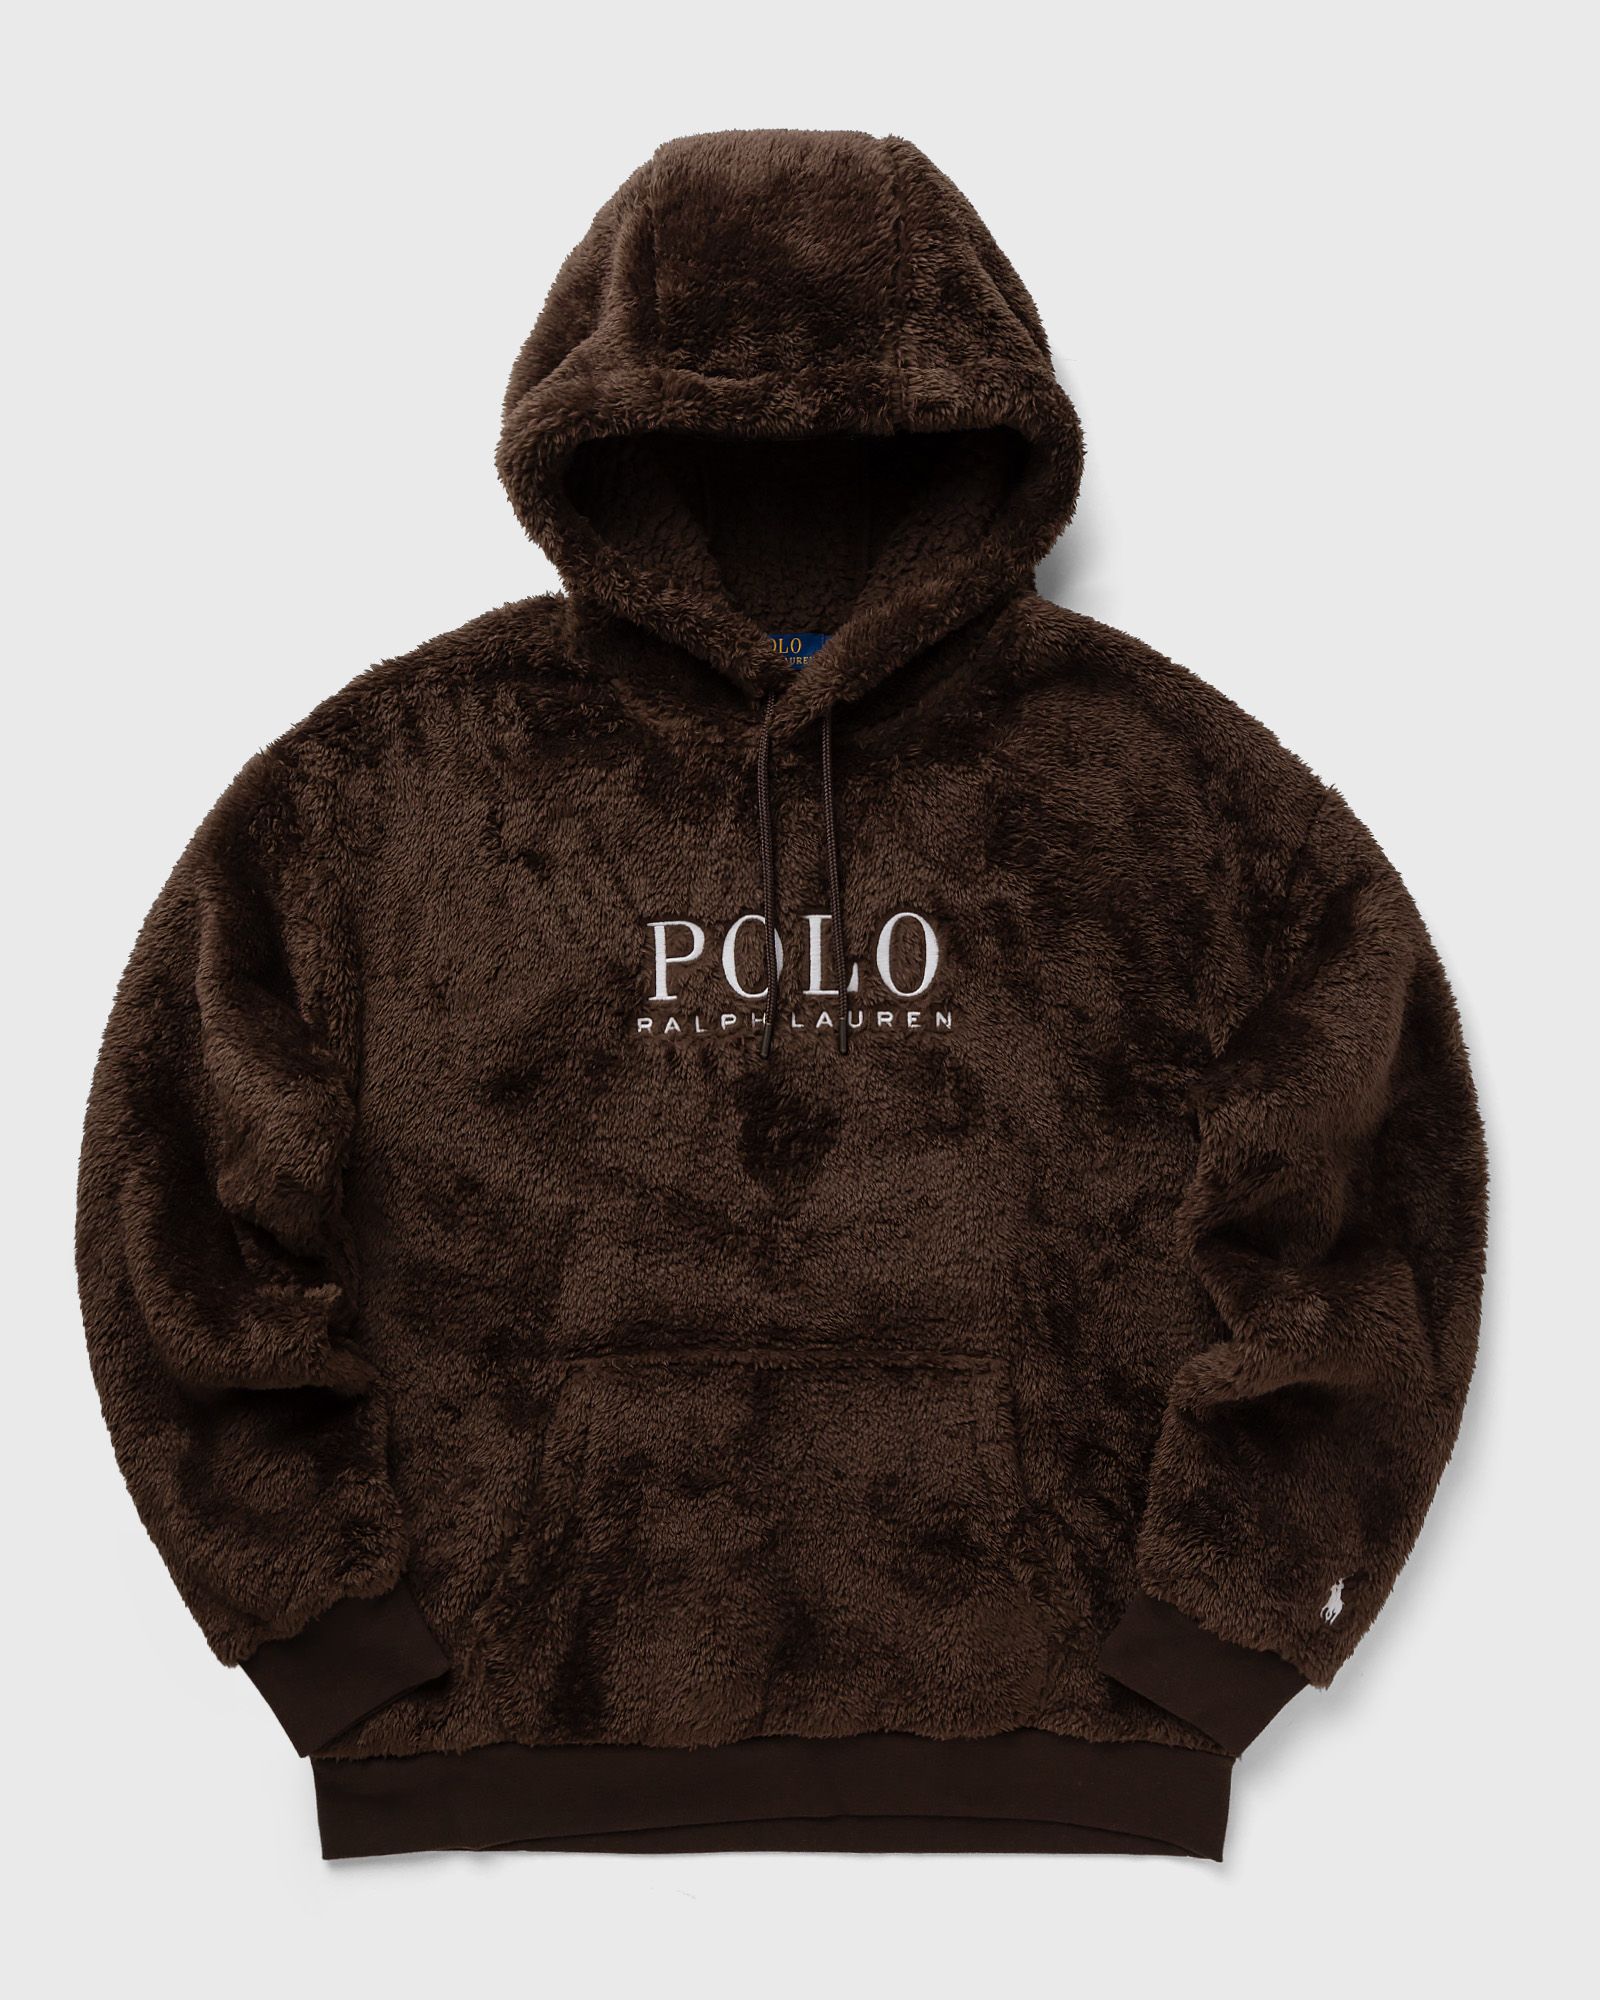 Polo Ralph Lauren - long sleeve-sweatshirt men hoodies brown in größe:xl